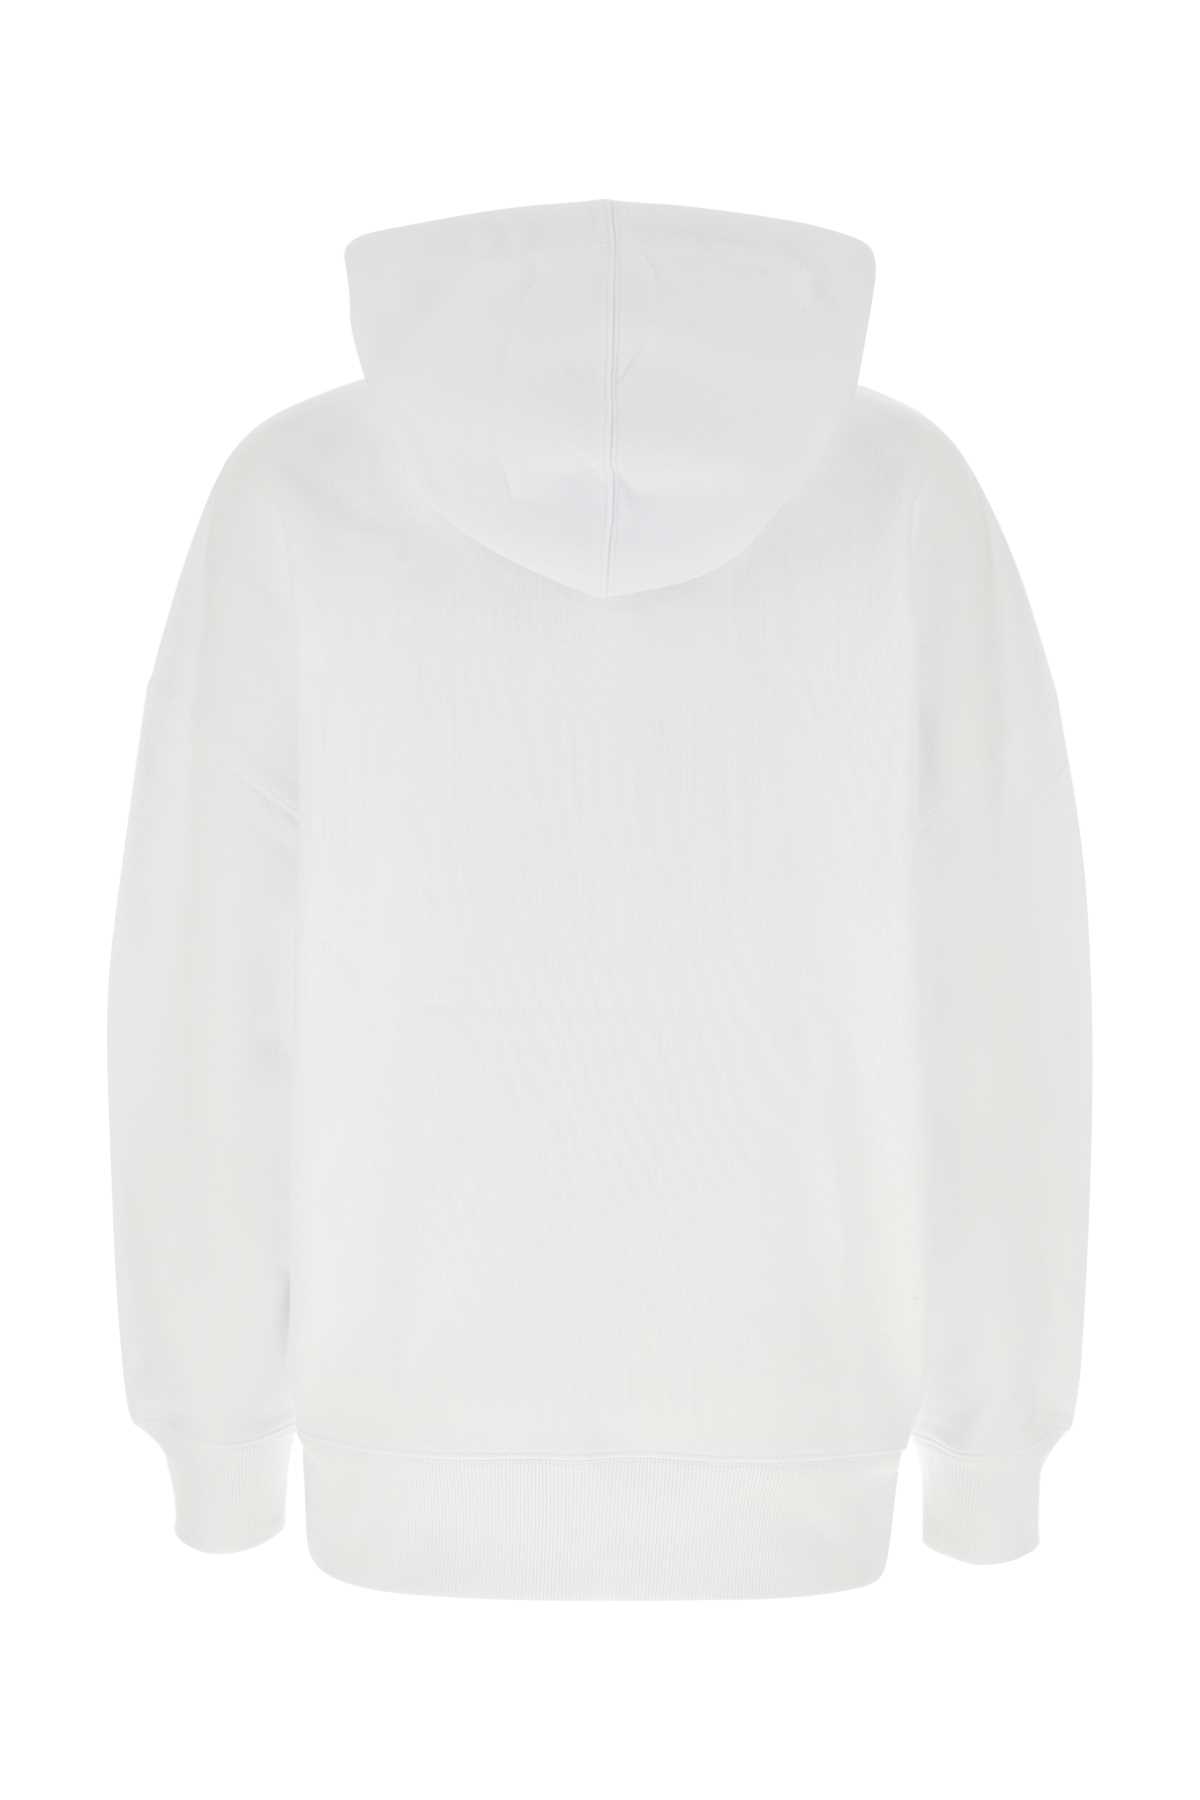 Ami Alexandre Mattiussi White Cotton Sweatshirt In 100